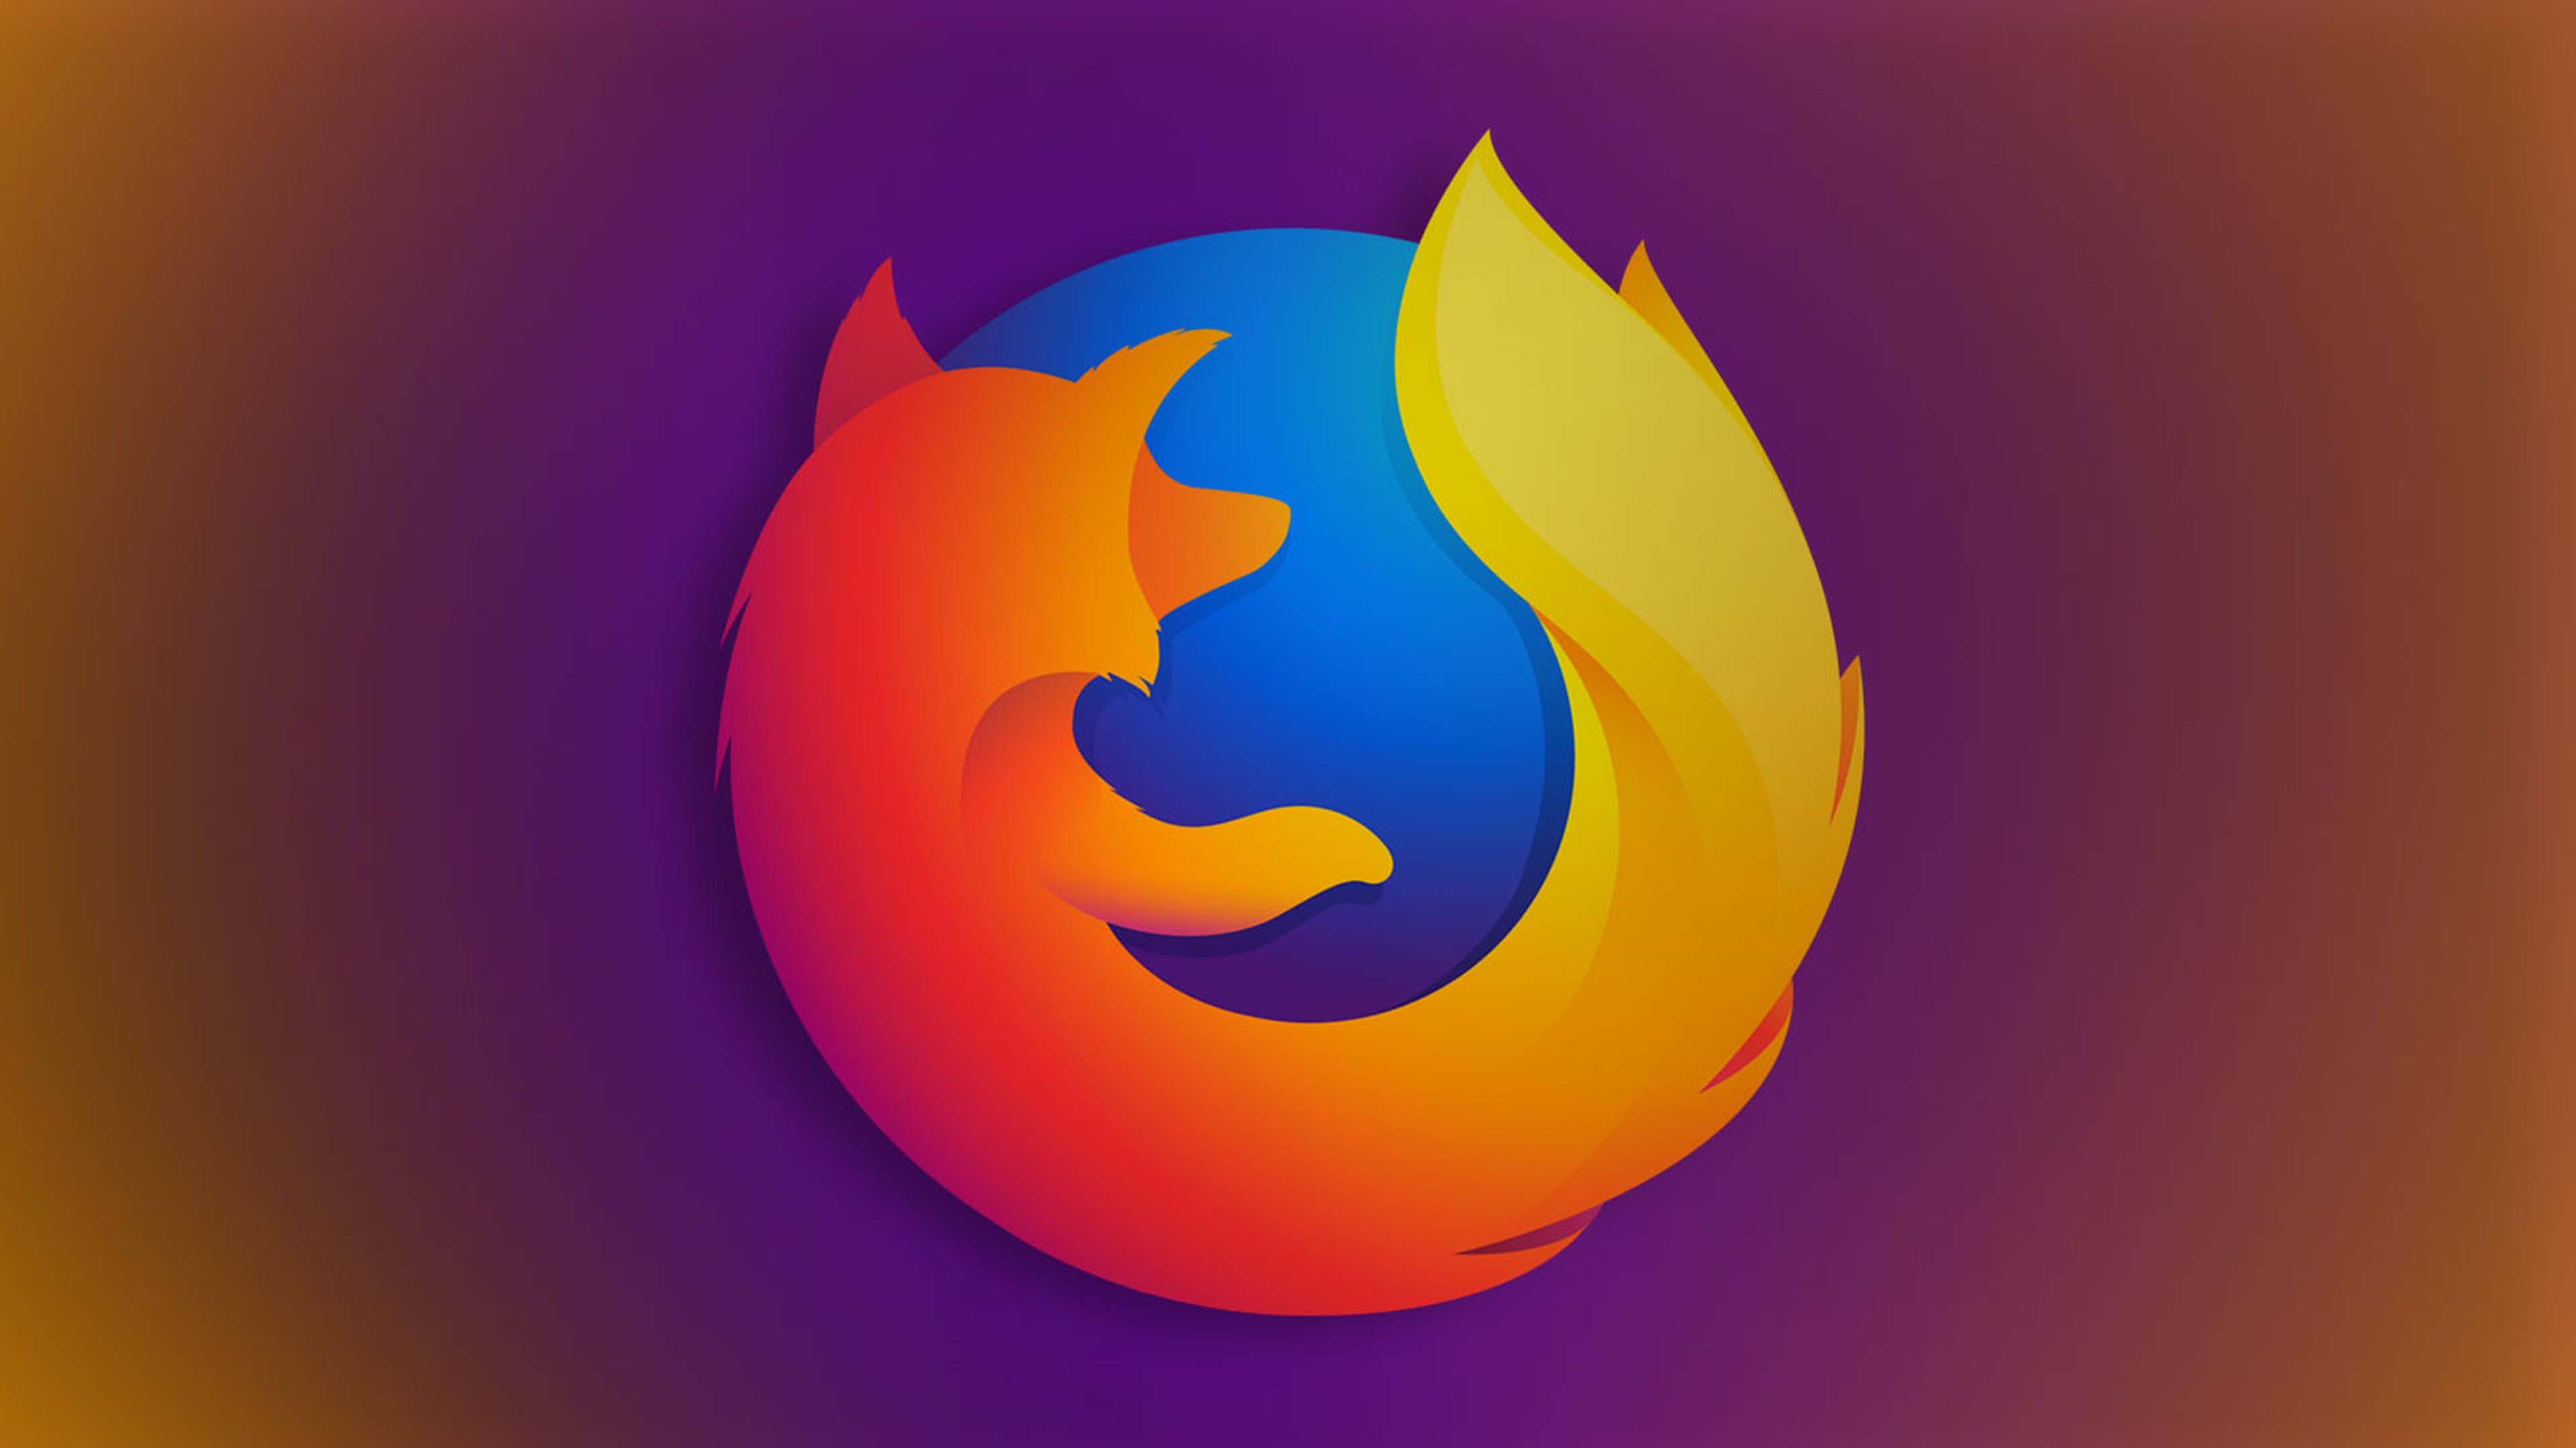 Mozilla Firefox 68